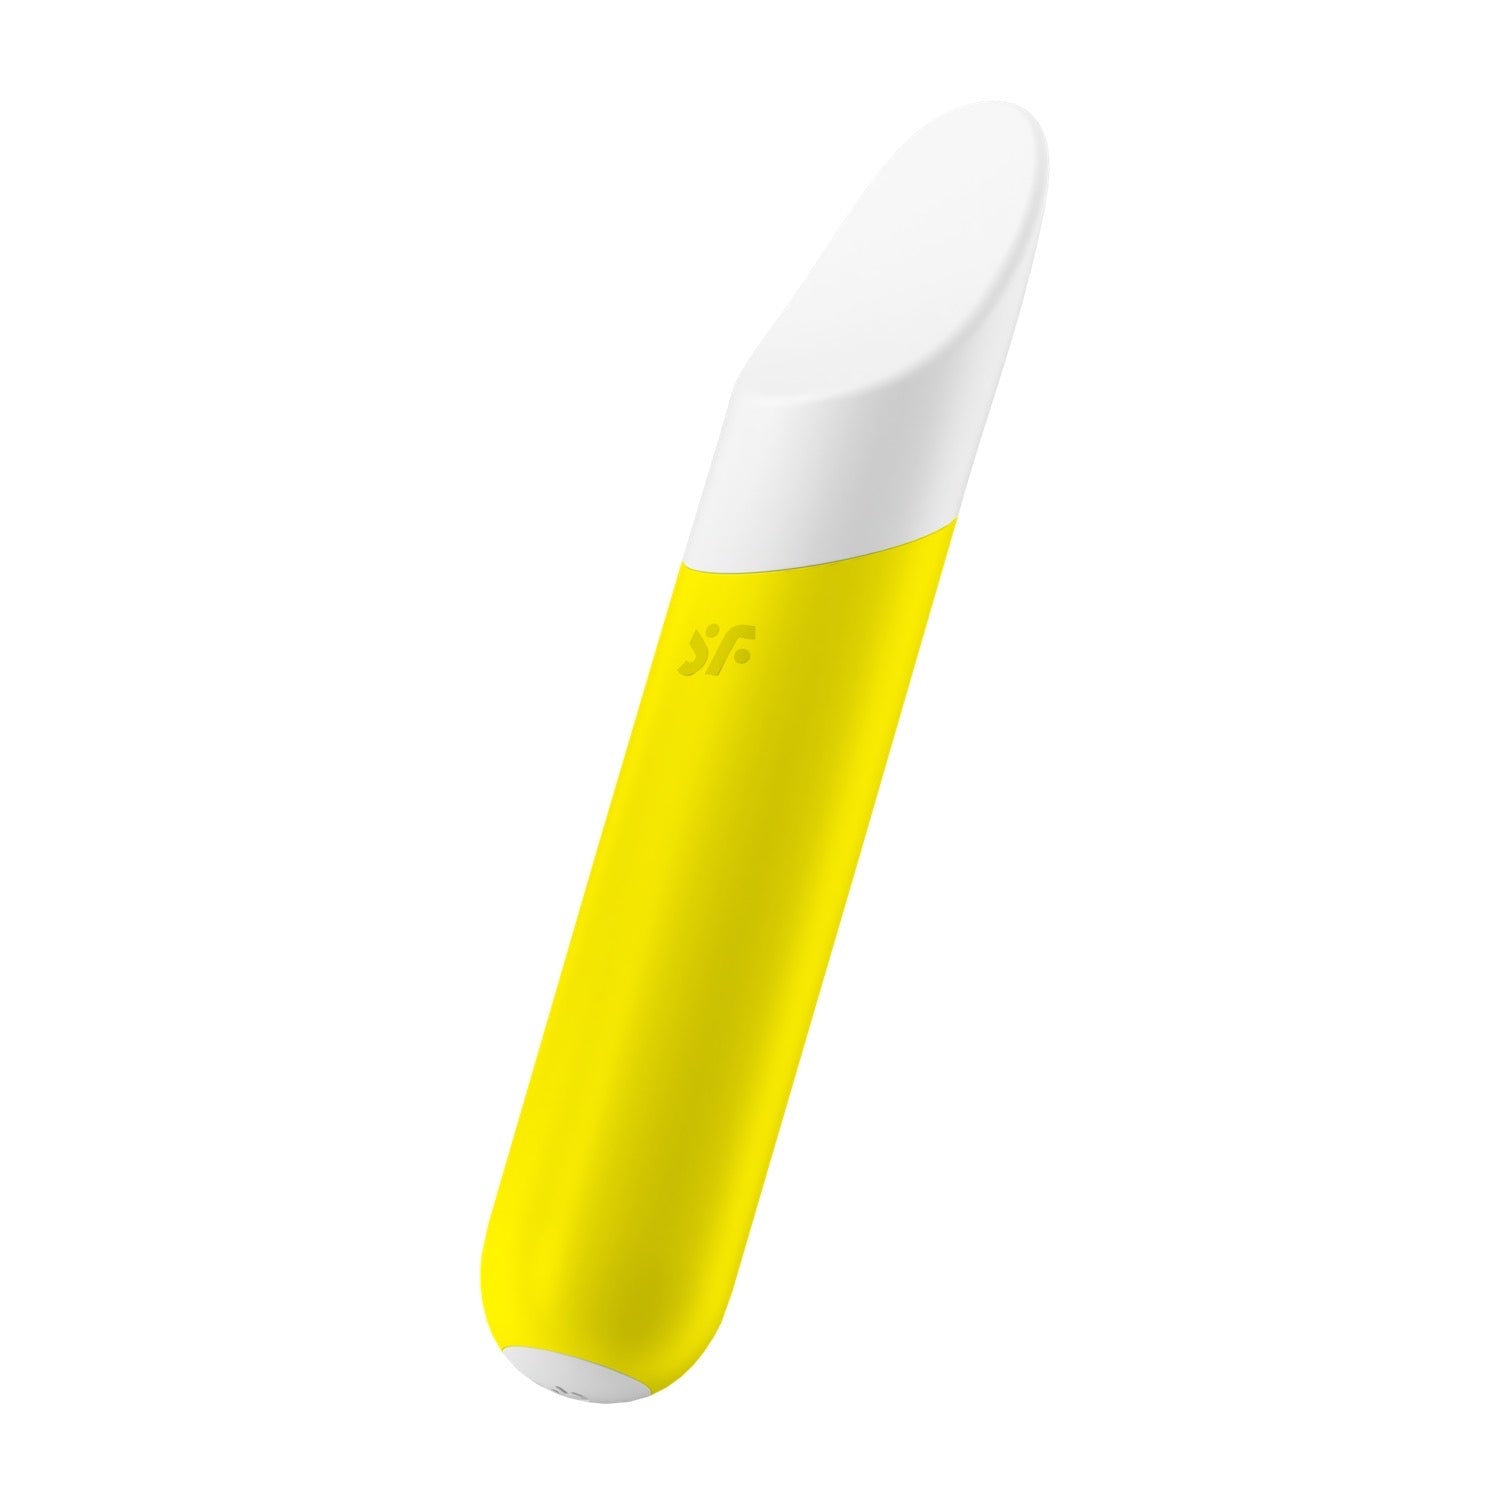 Satisfyer Ultra Power Bullet 7 - Yellow by Satisfyer